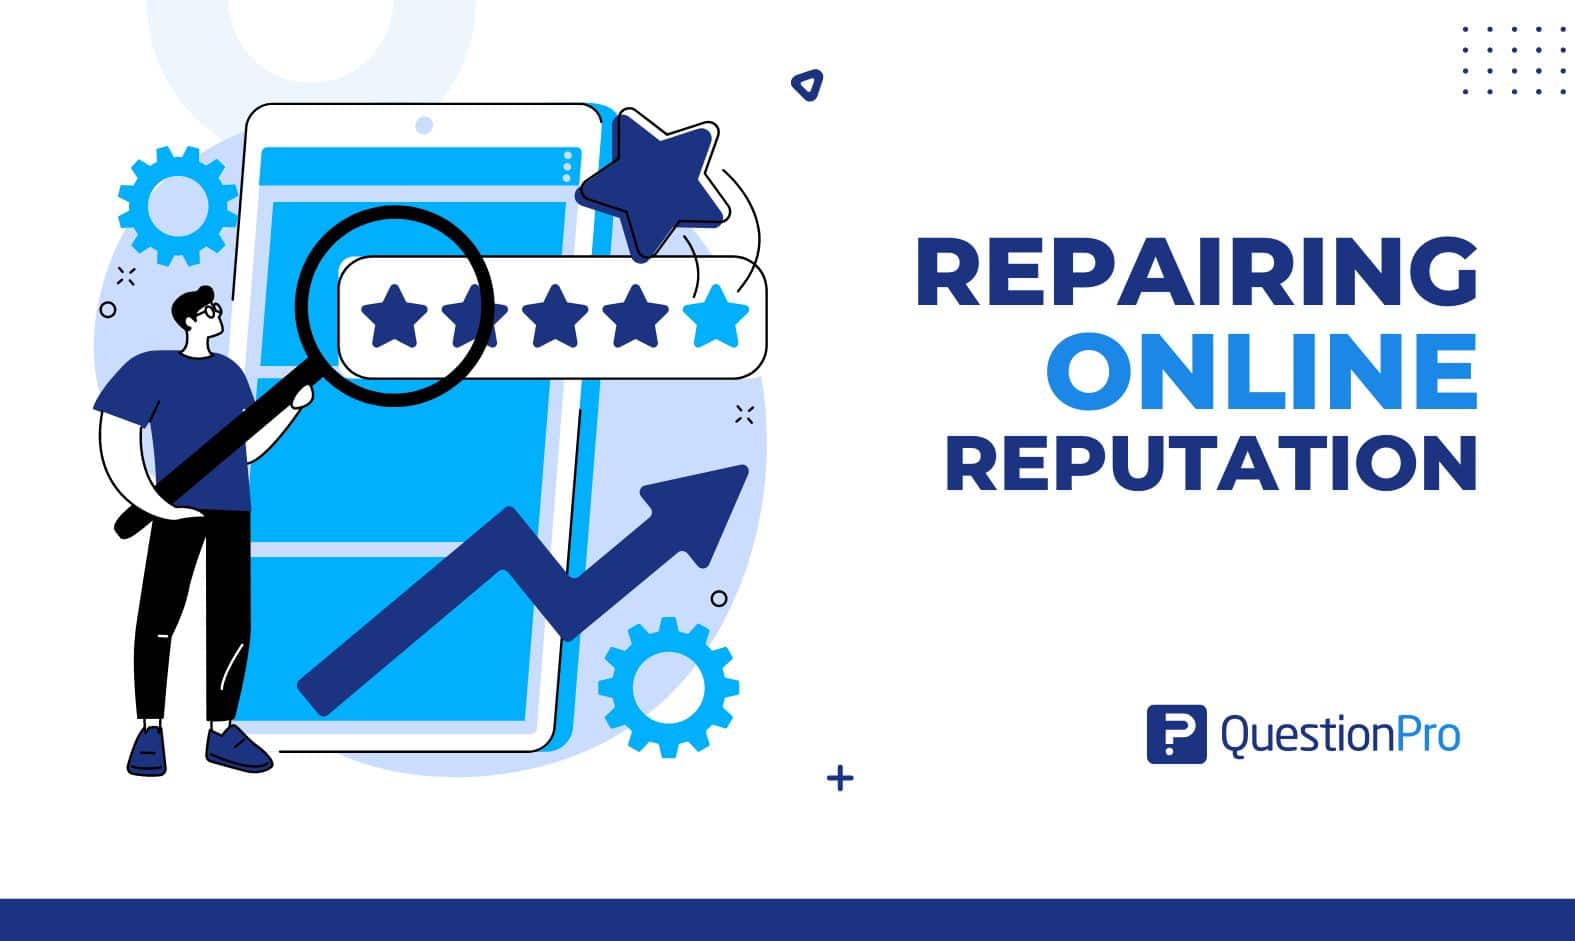 8 Easy Ways for Repairing Online Reputation